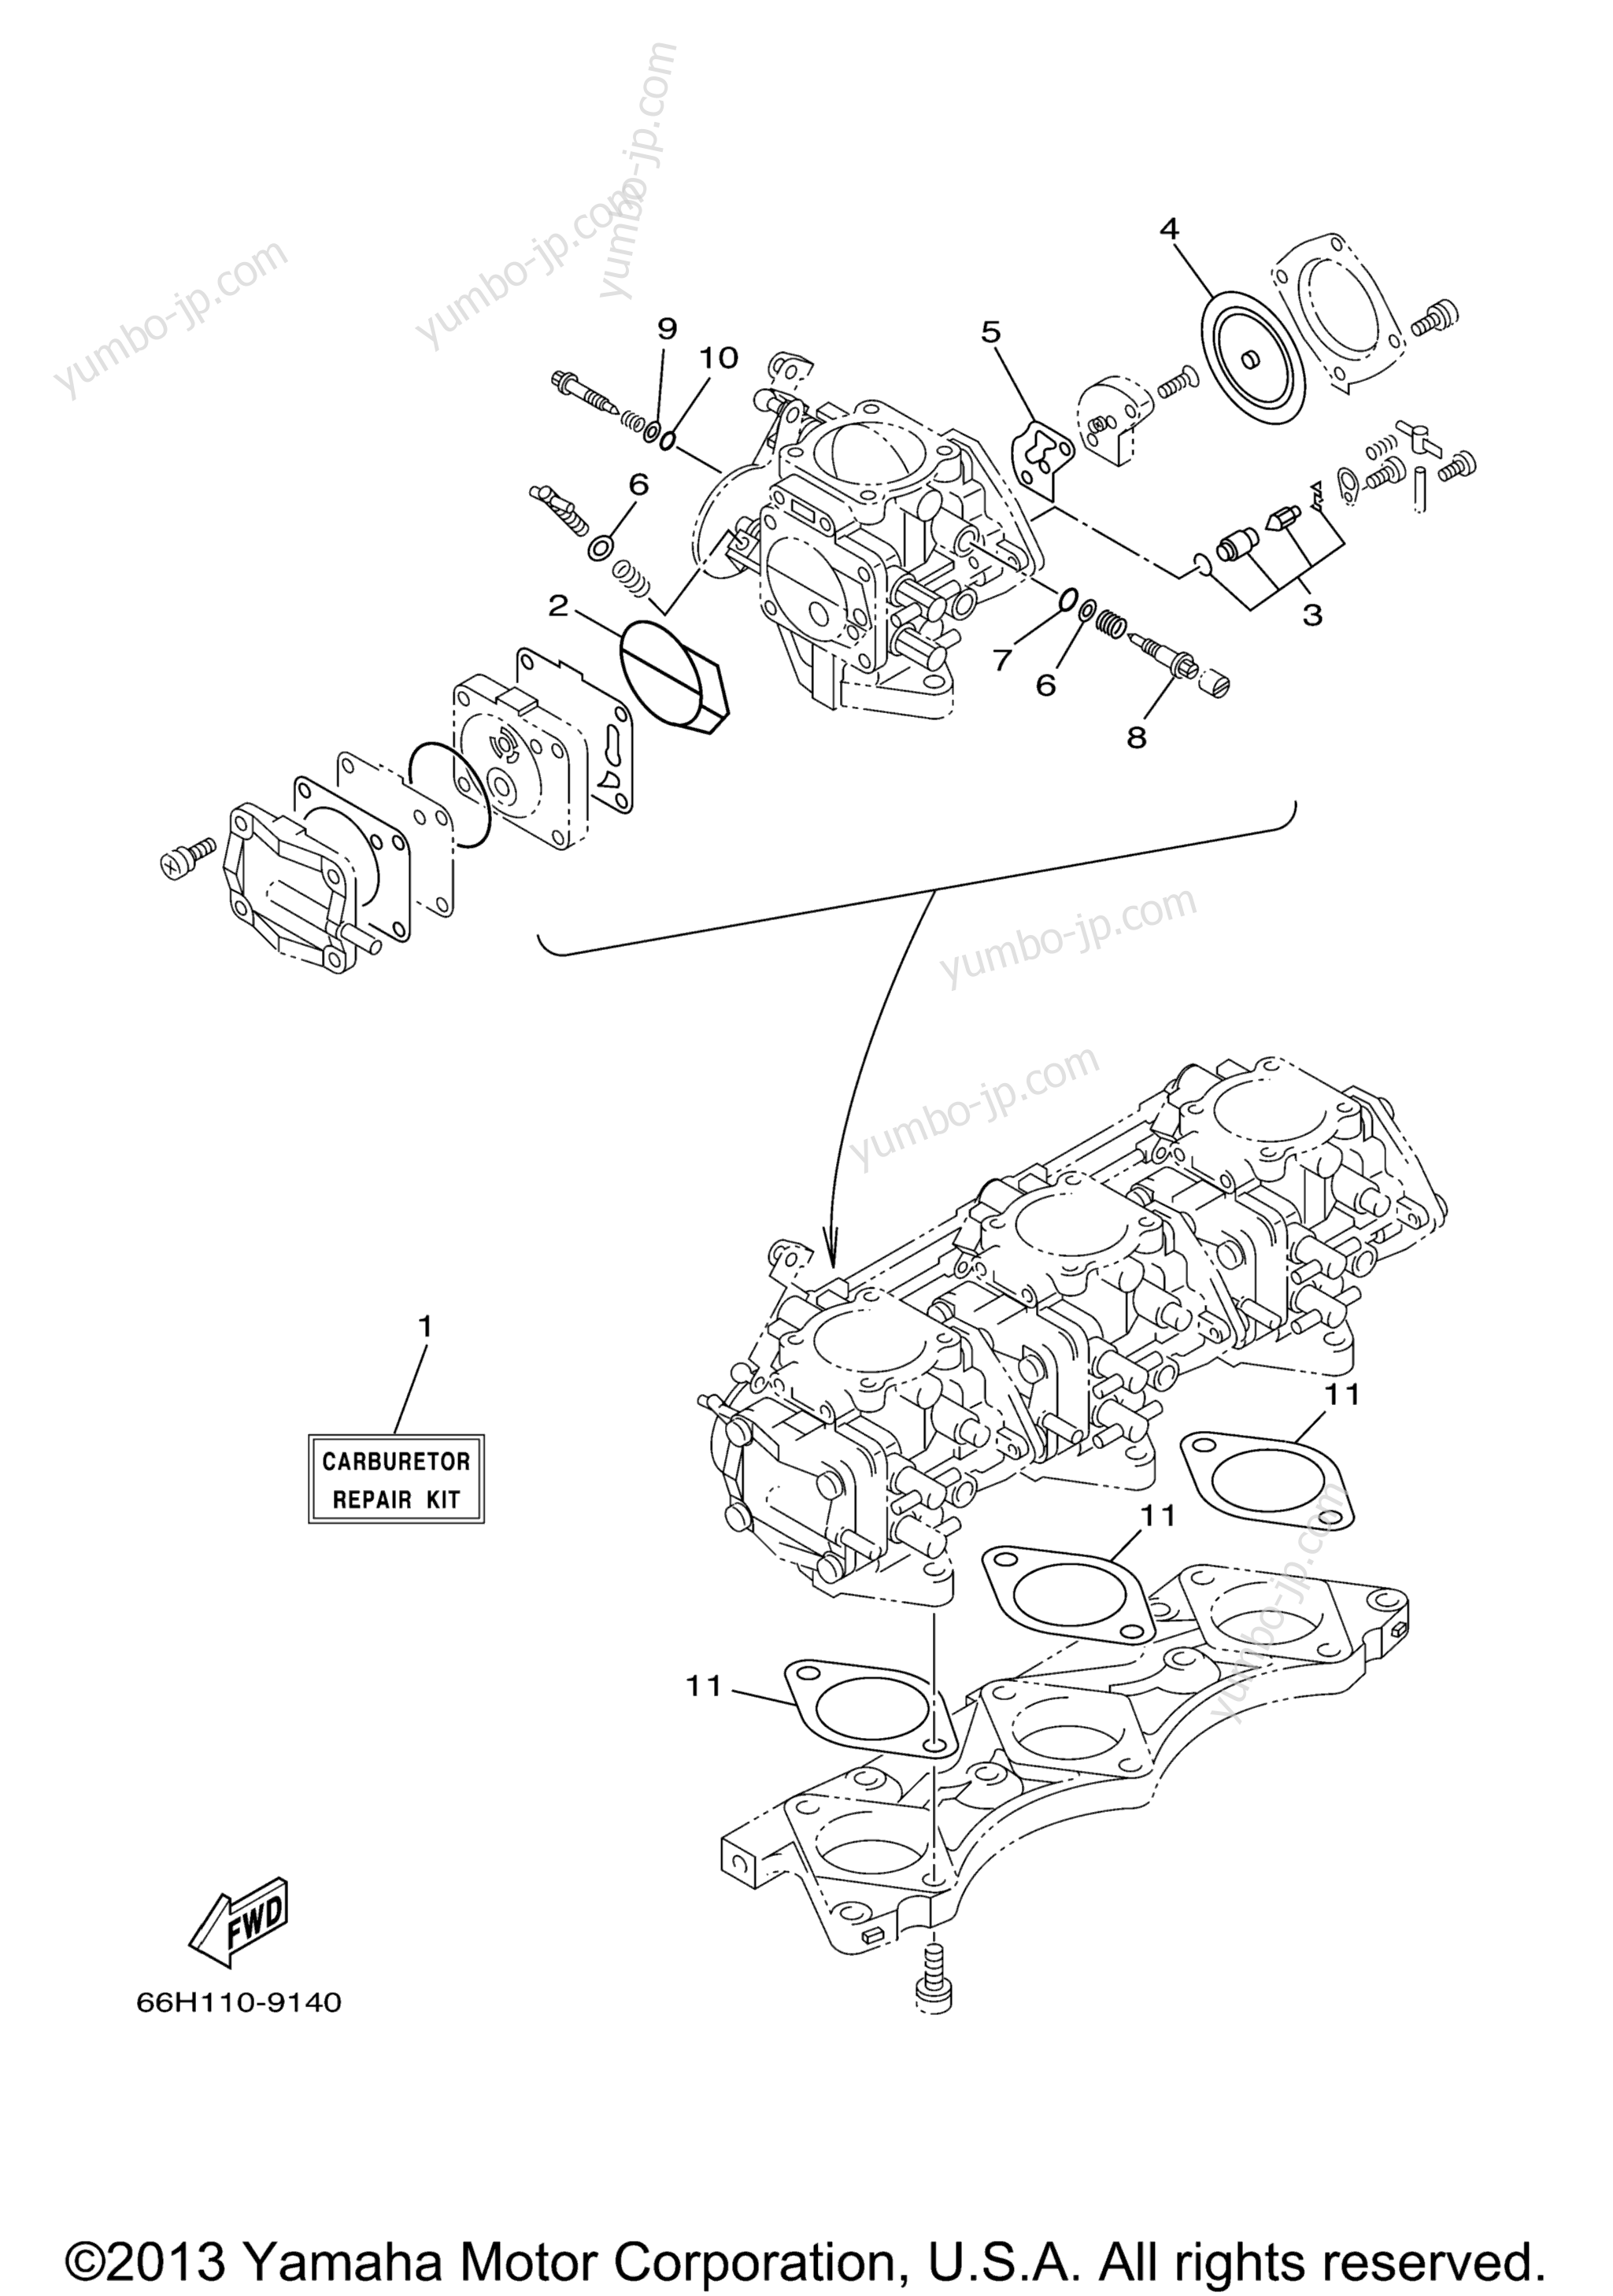 Repair Kit 2 для гидроциклов YAMAHA SUV1200 (SV1200Y) 2000 г.